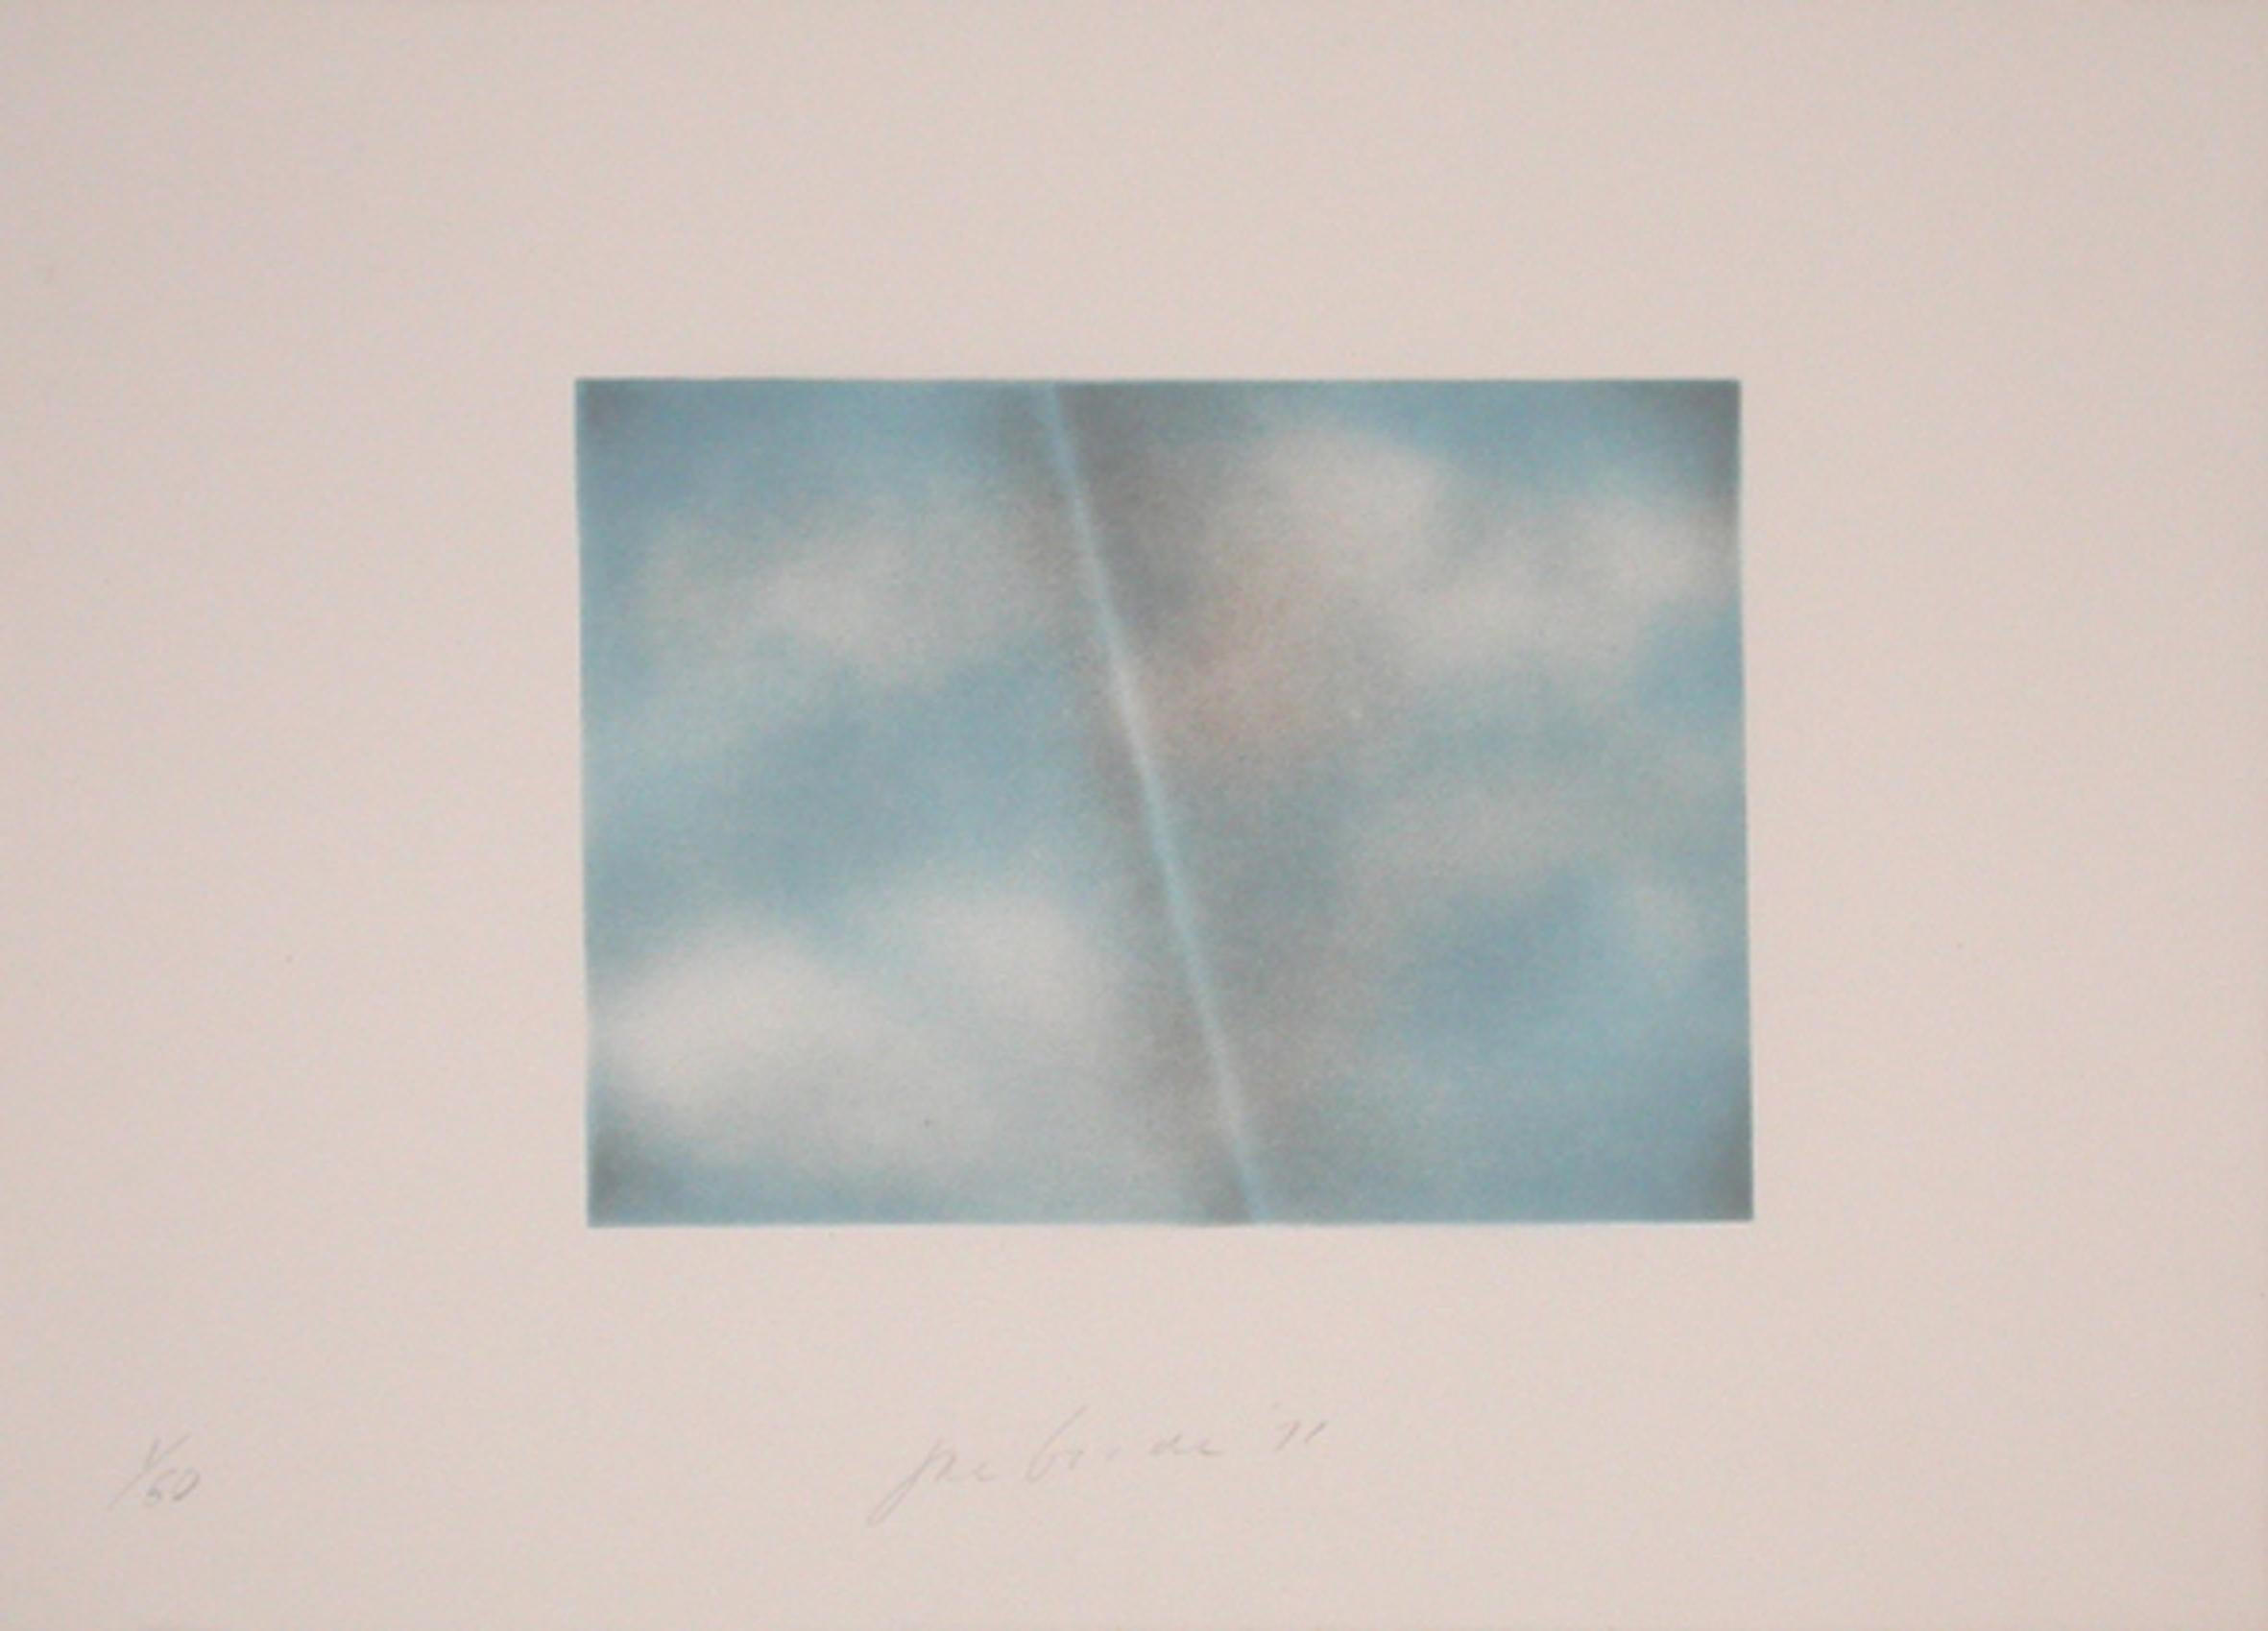 Abstract Print Joe Goode - Nuages pliés gris - II Bleu et blanc